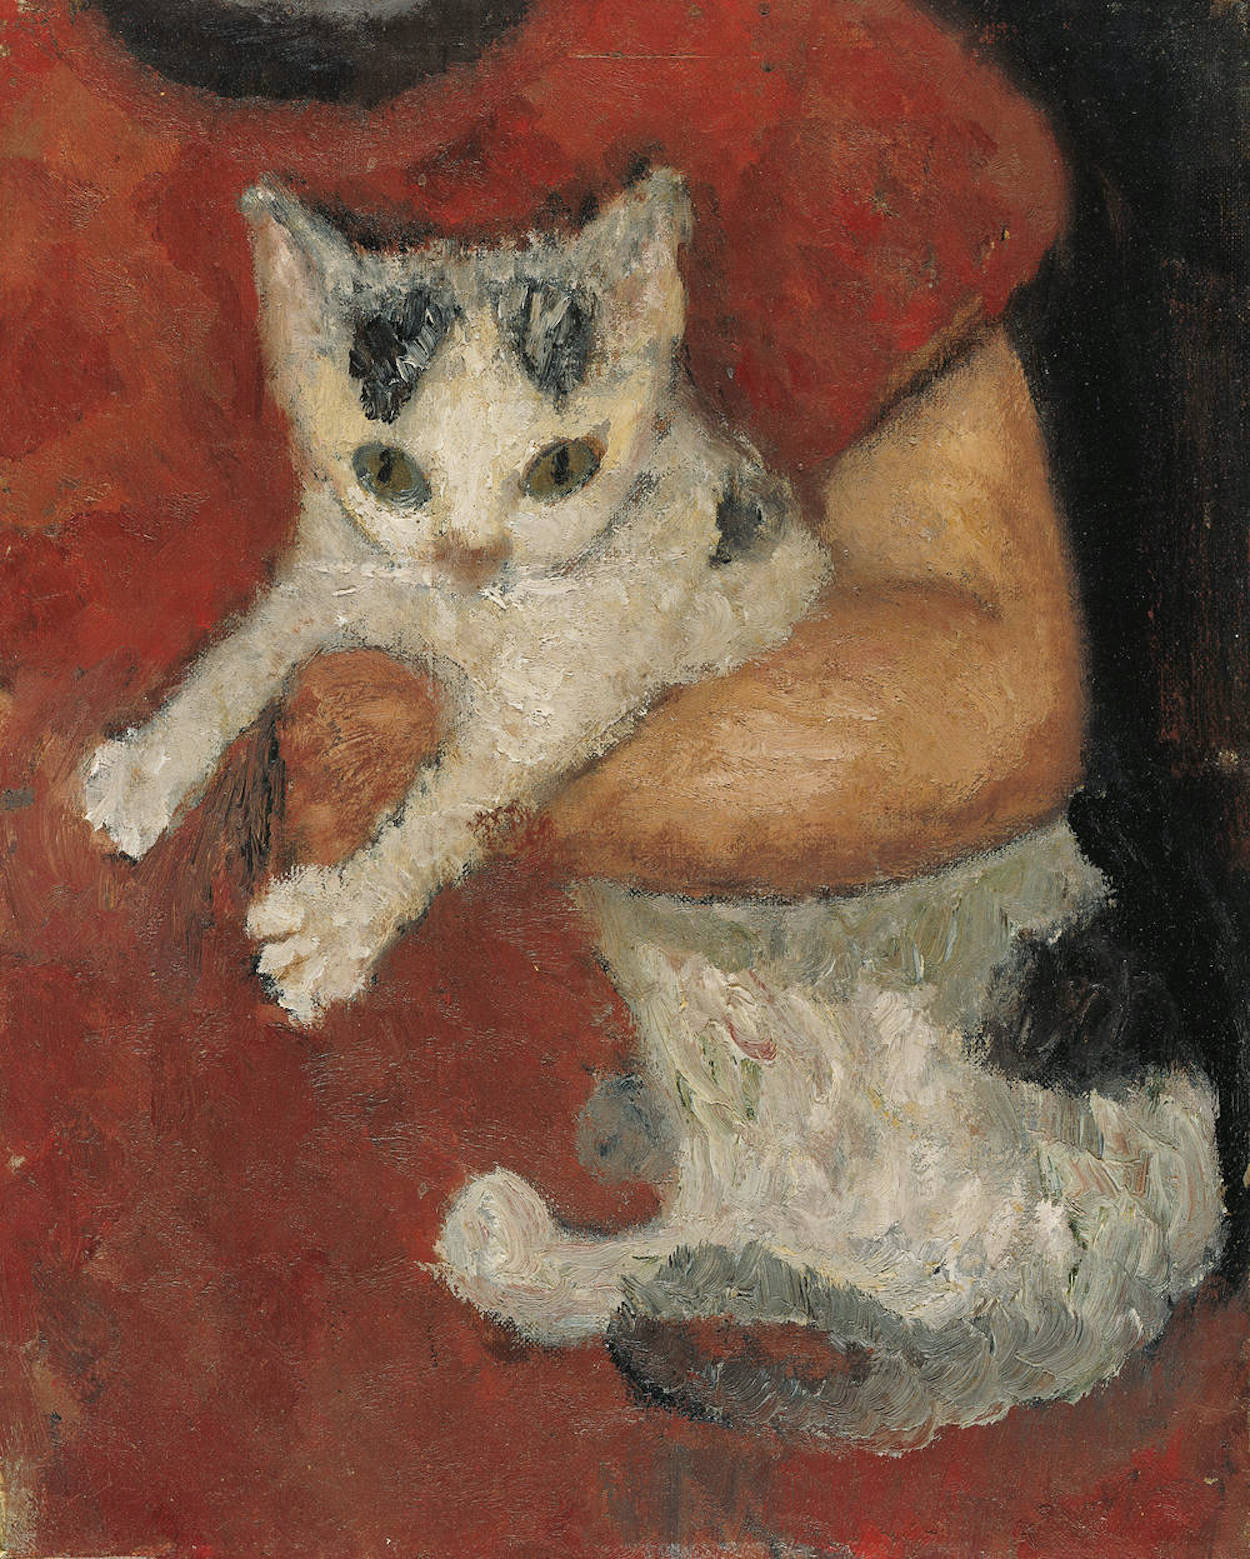 Cat in a Child Arm by Paula Modersohn-Becker - 1903 - 32.5 x 25.6 cm Kunsthalle Bremen